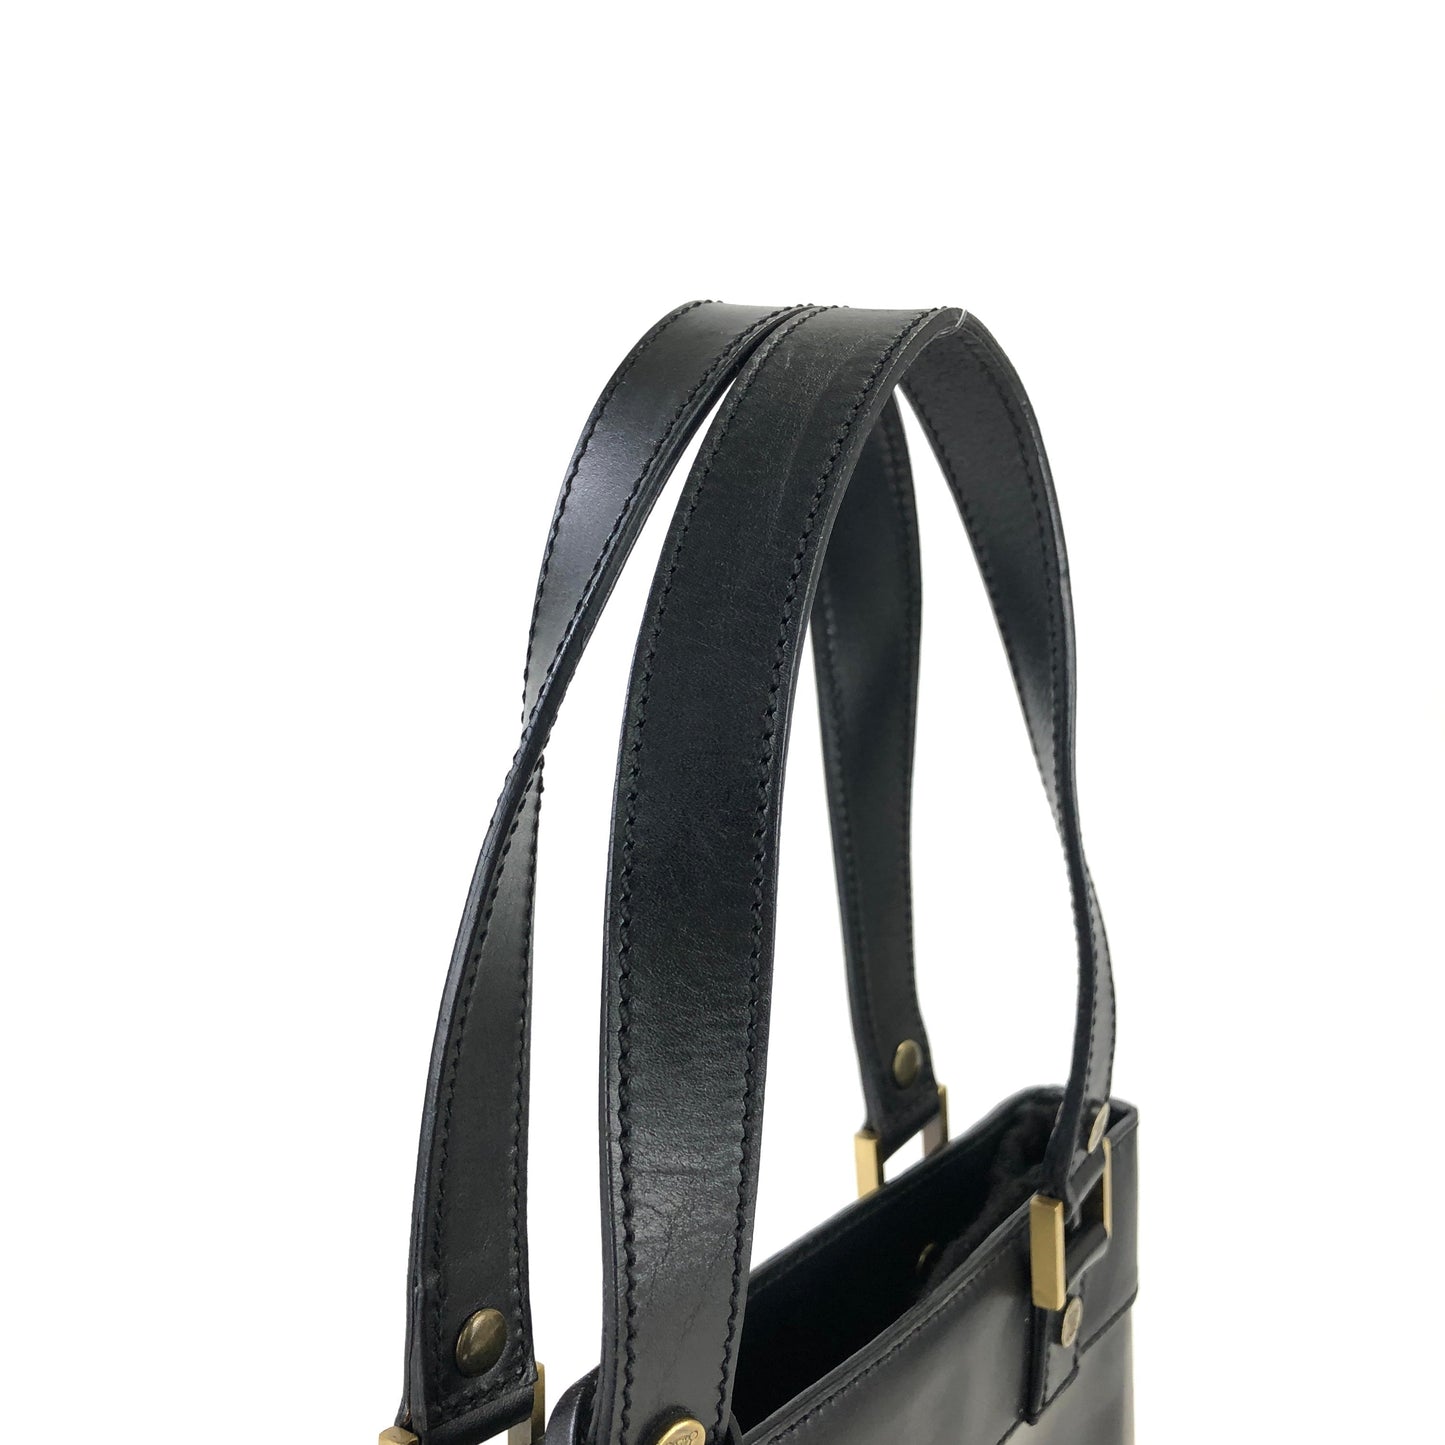 CELINE Blason Clear Plate Charm Leather PVC Handbag Black vintage Old Celine ercjxm